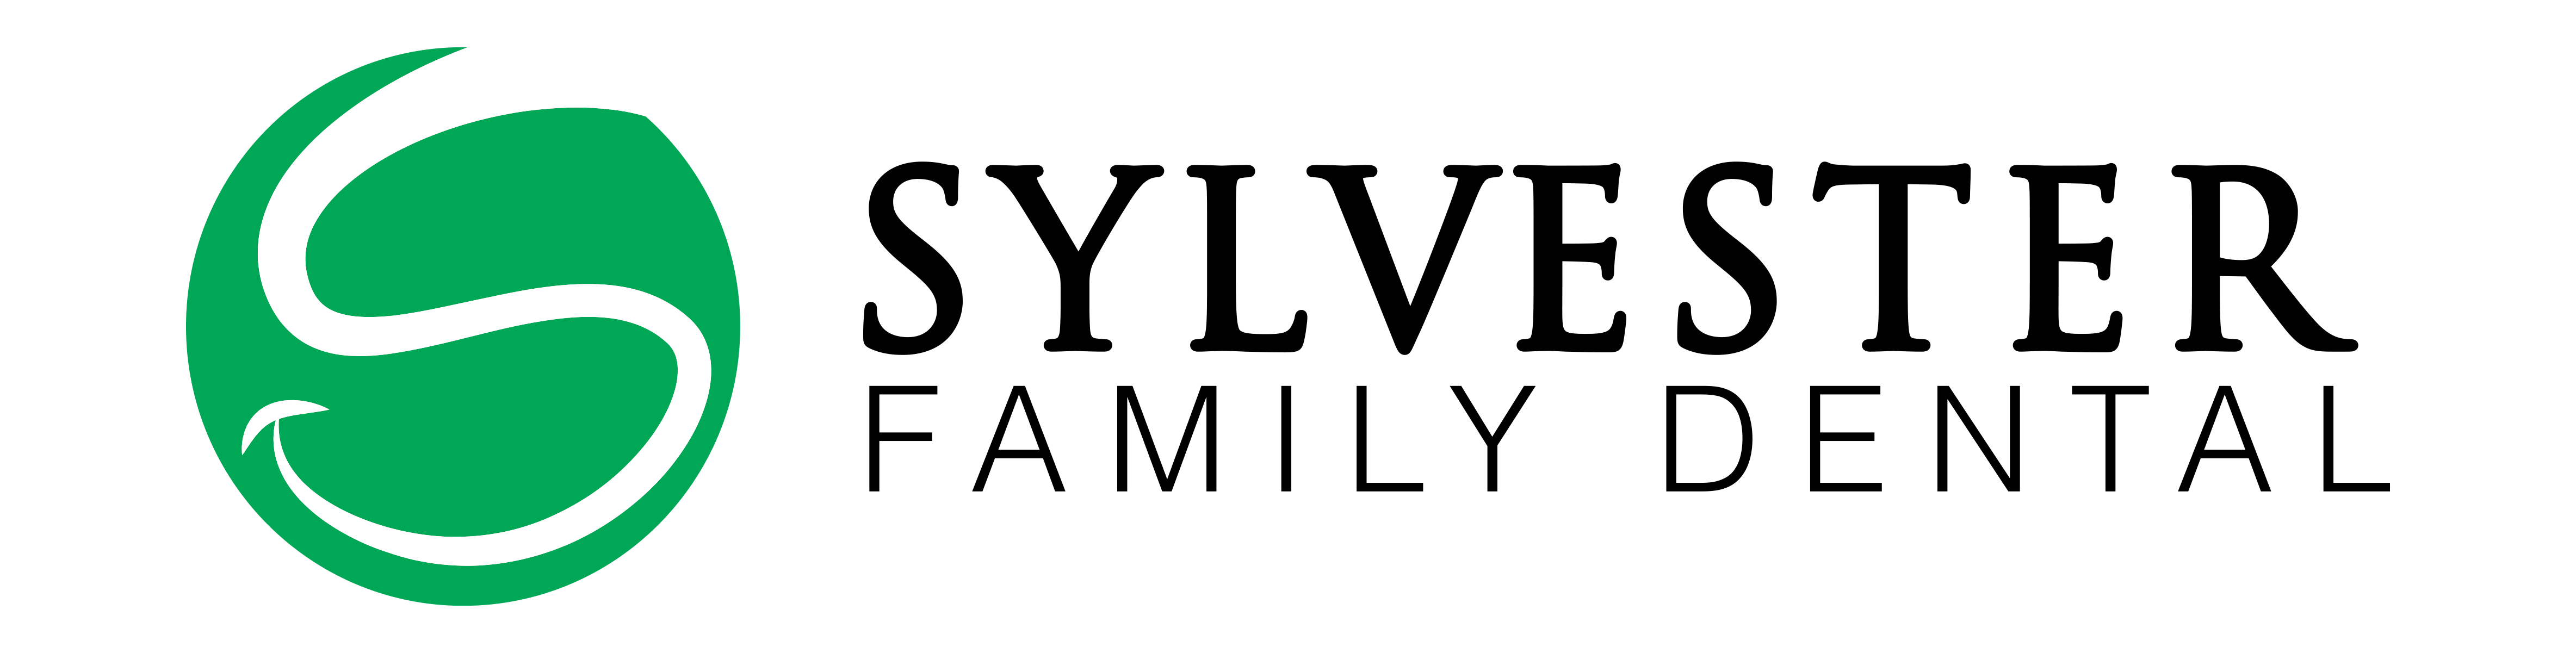 sylvester logo no shading black letters